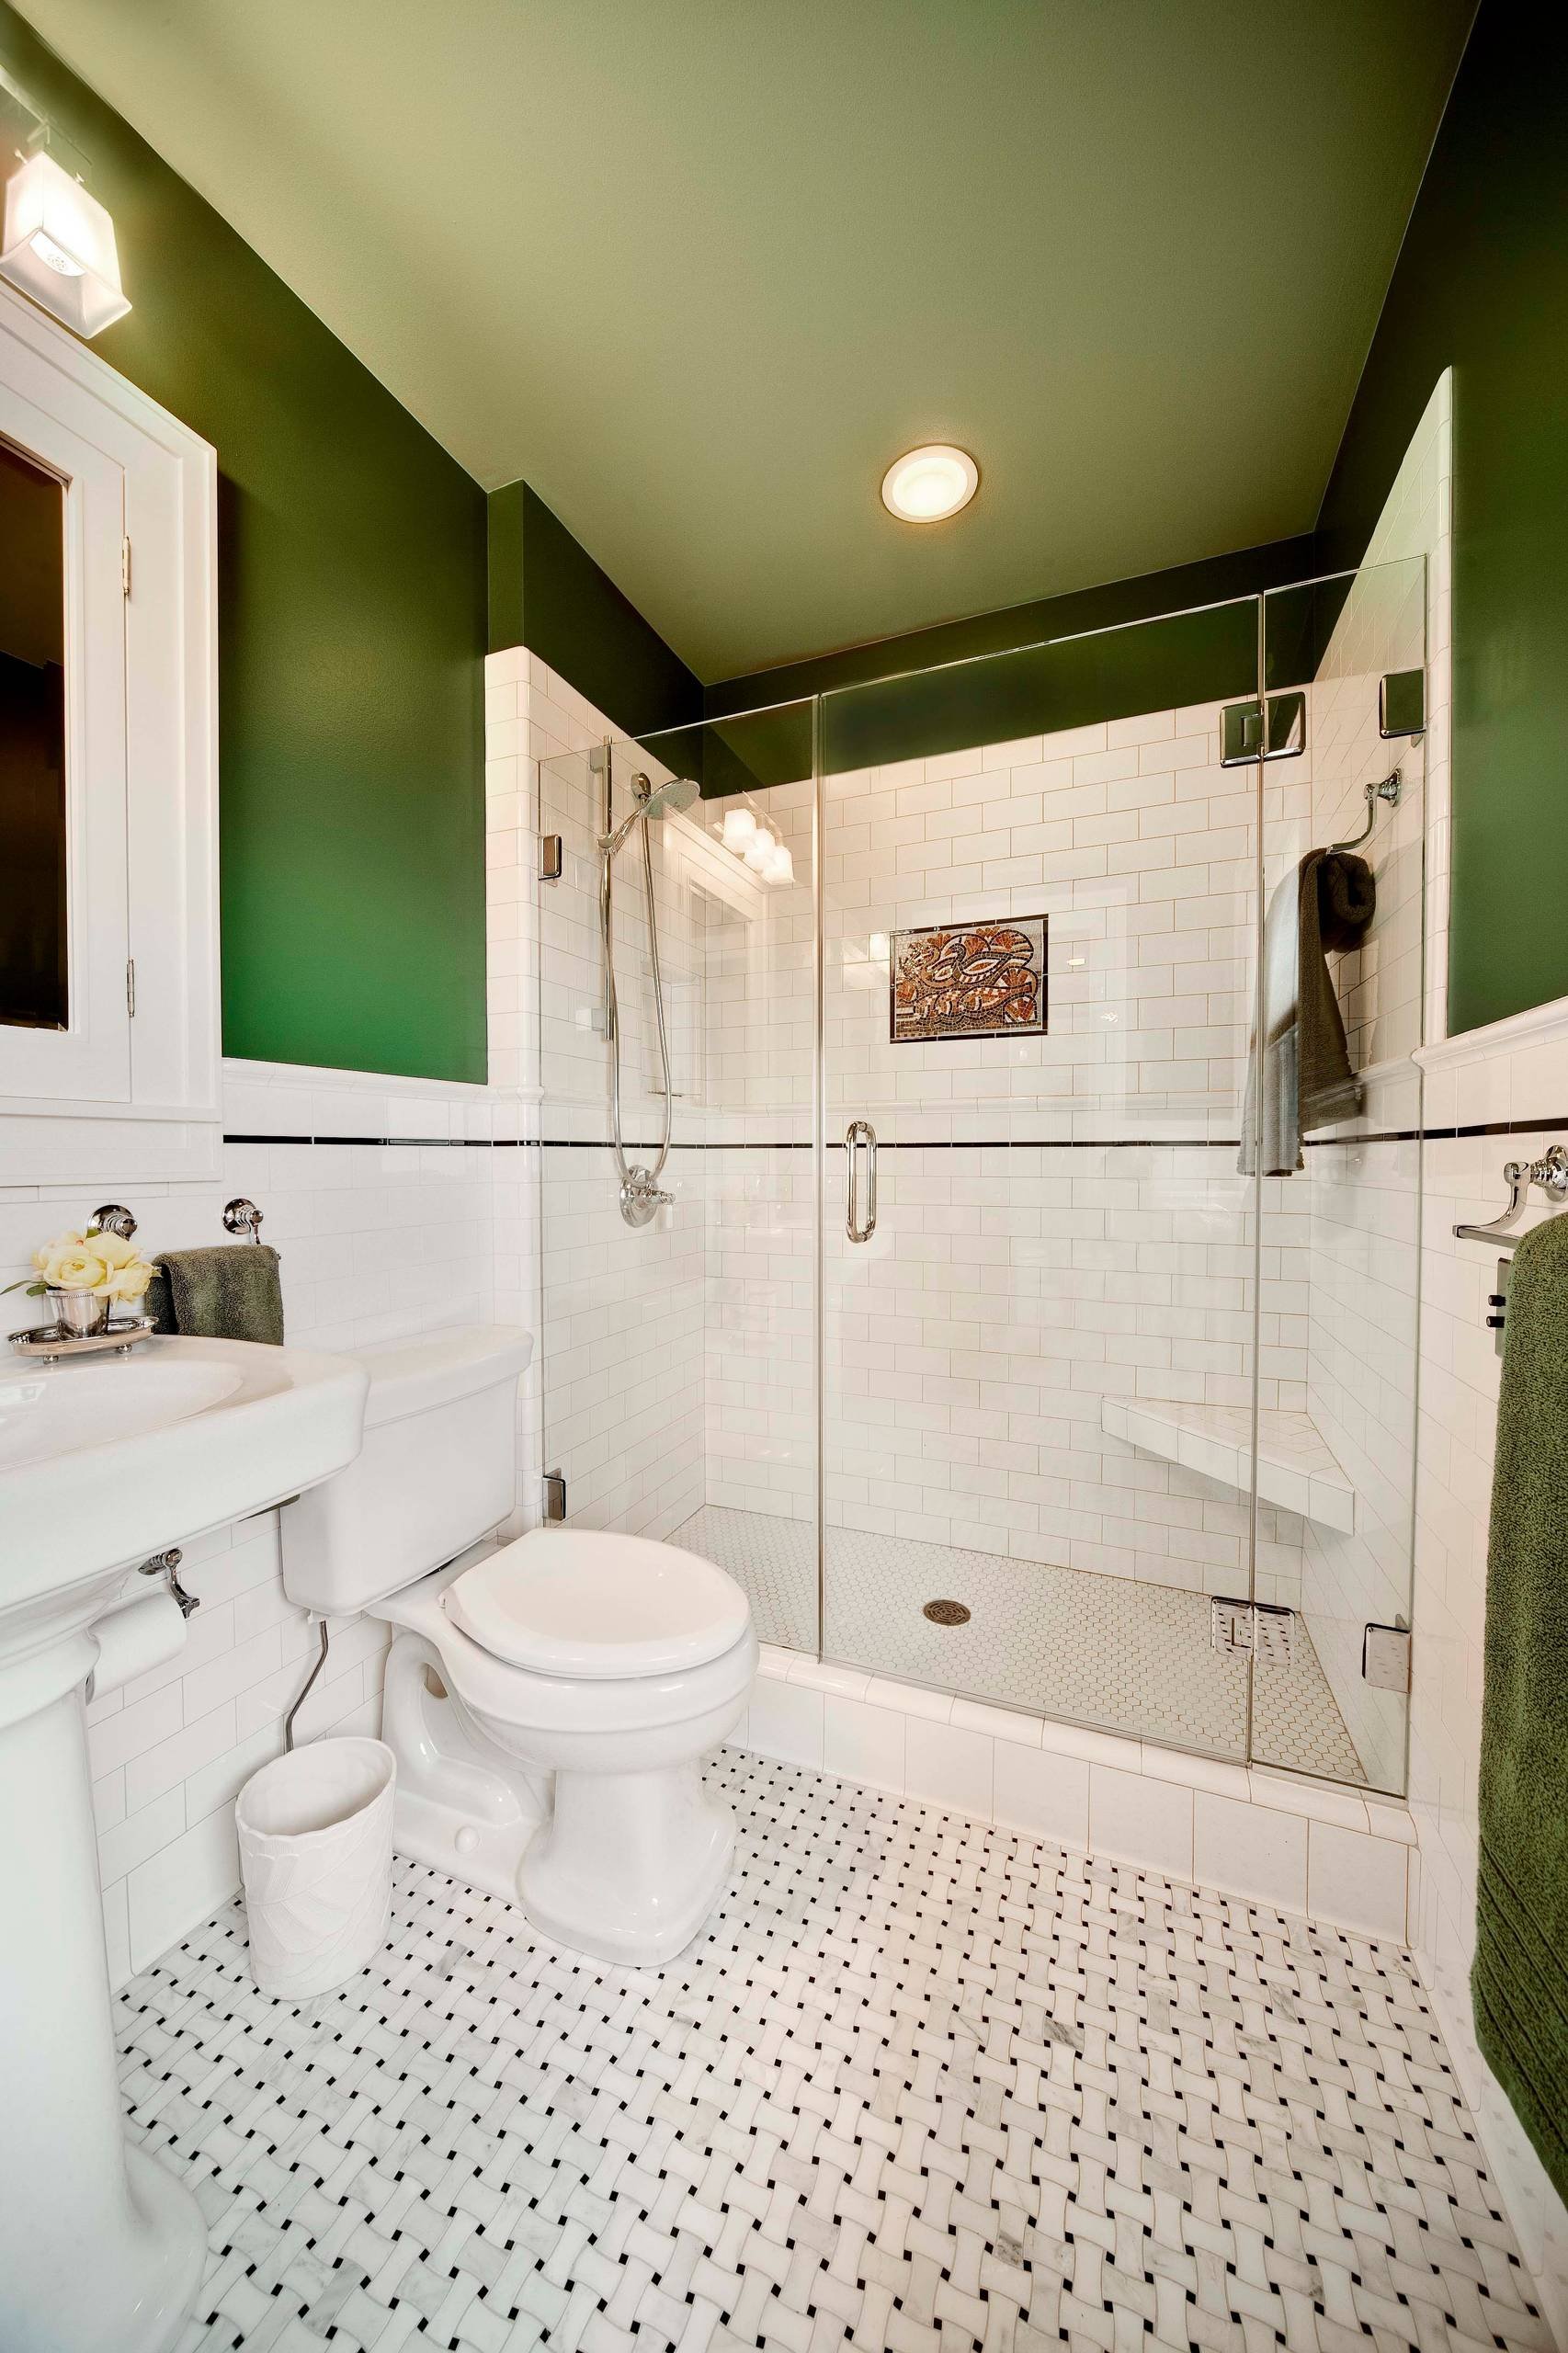 Туалет цвет зеленый. Зеленванна комната. Интерьер санузла. Бело зеленая ванная комната. Зеленая ванна в современном интерьере.